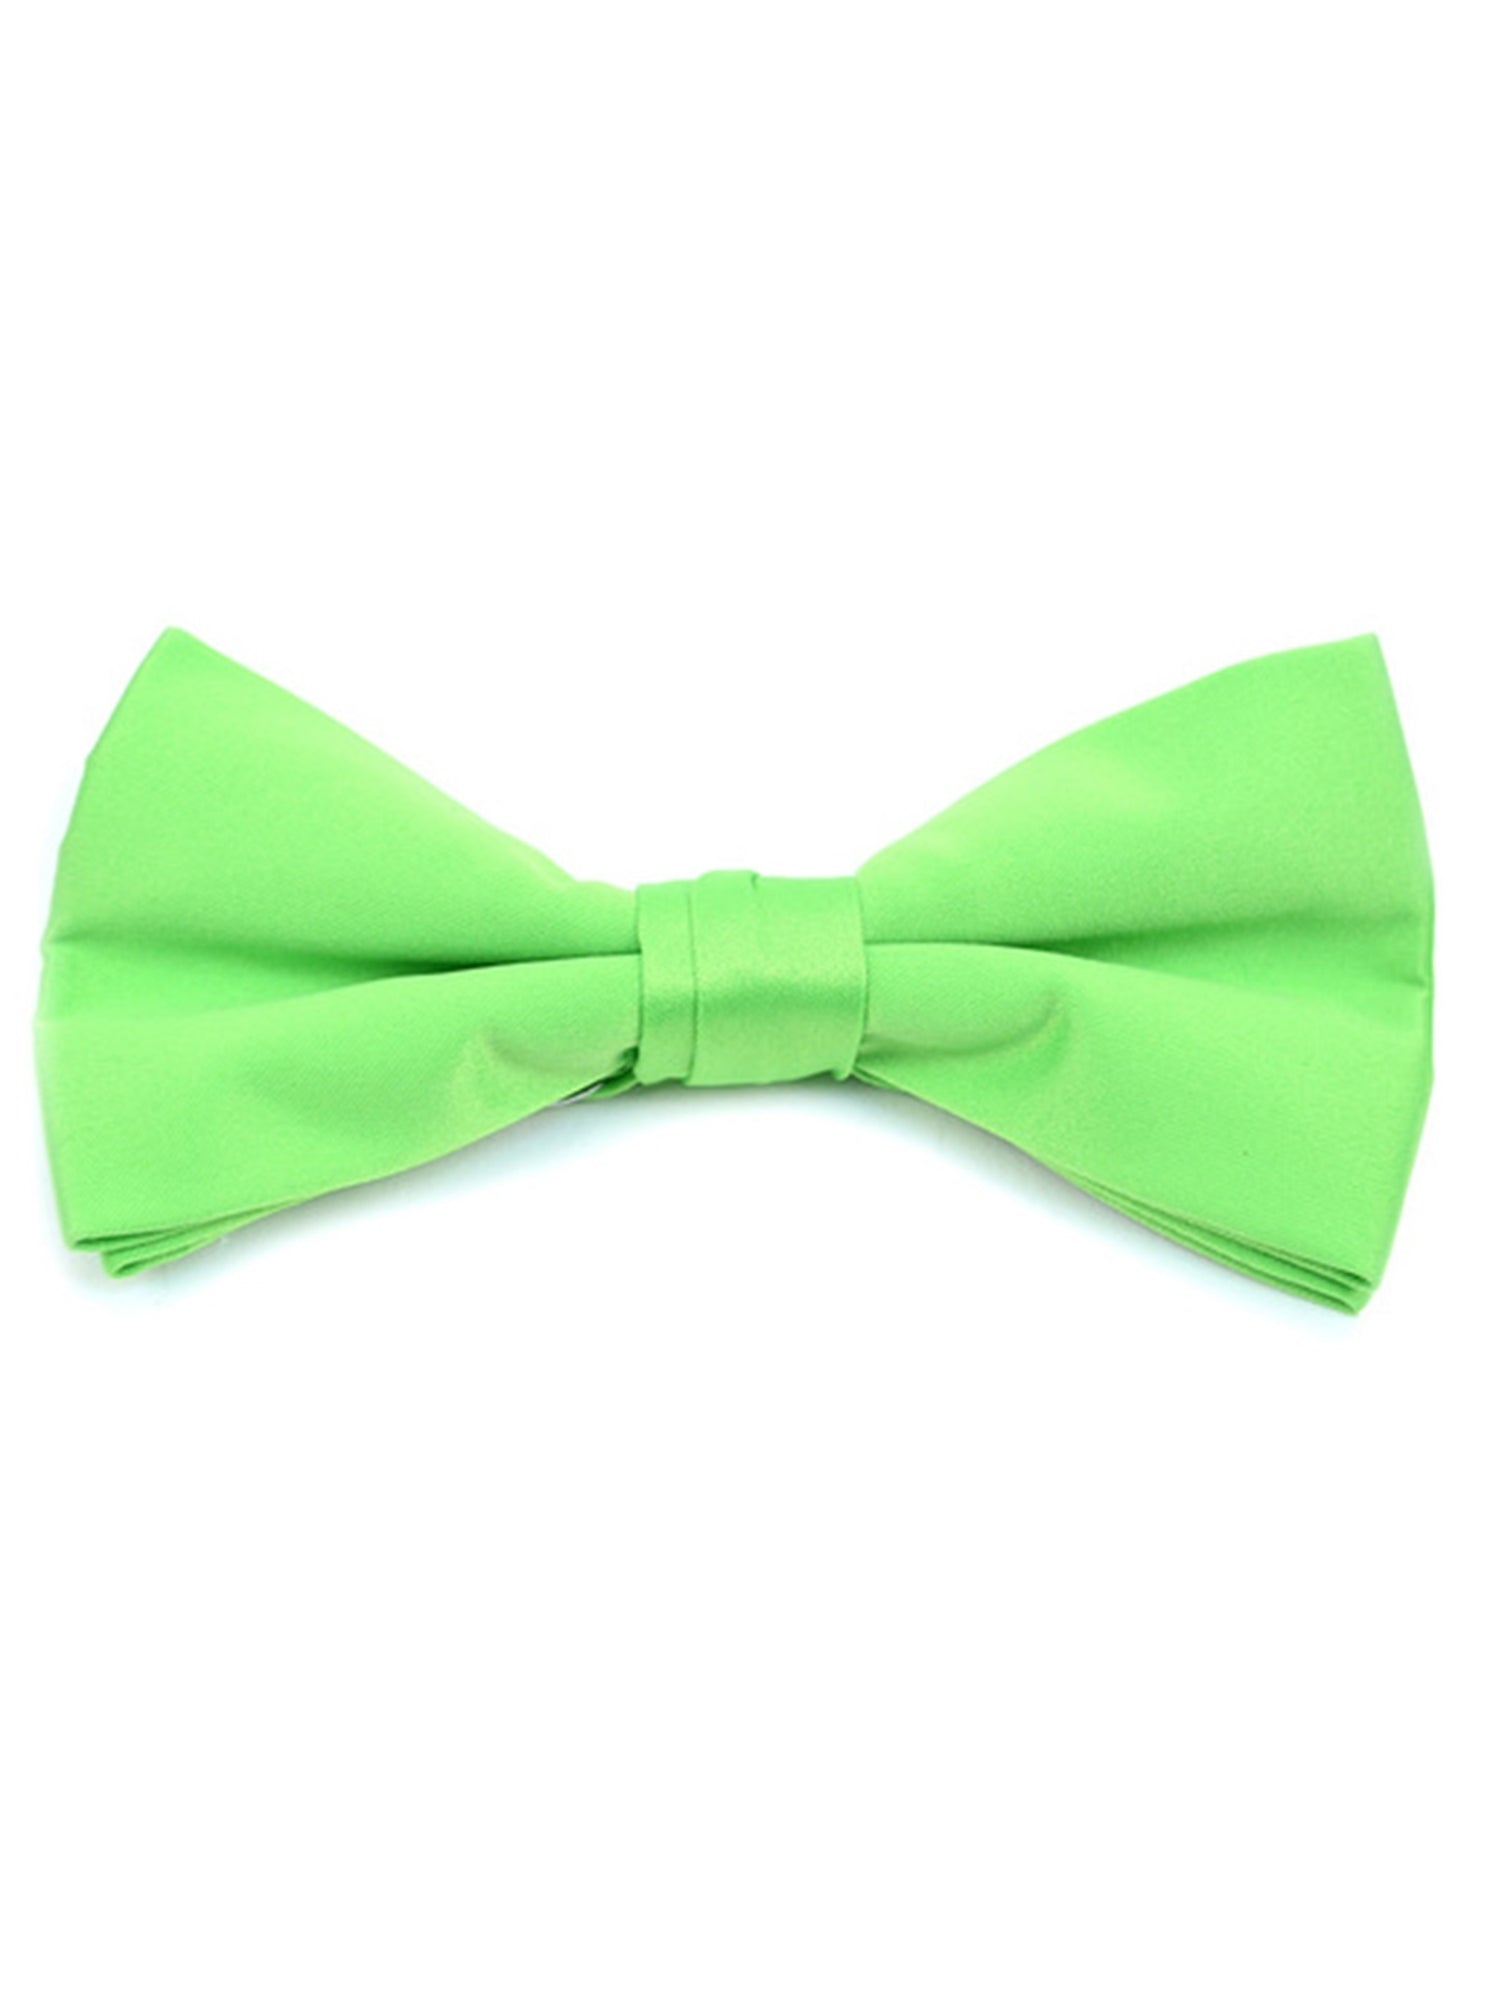 Men's Pre-tied Adjustable Length Bow Tie - Formal Tuxedo Solid Color Men's Solid Color Bow Tie TheDapperTie Neon Green One Size 